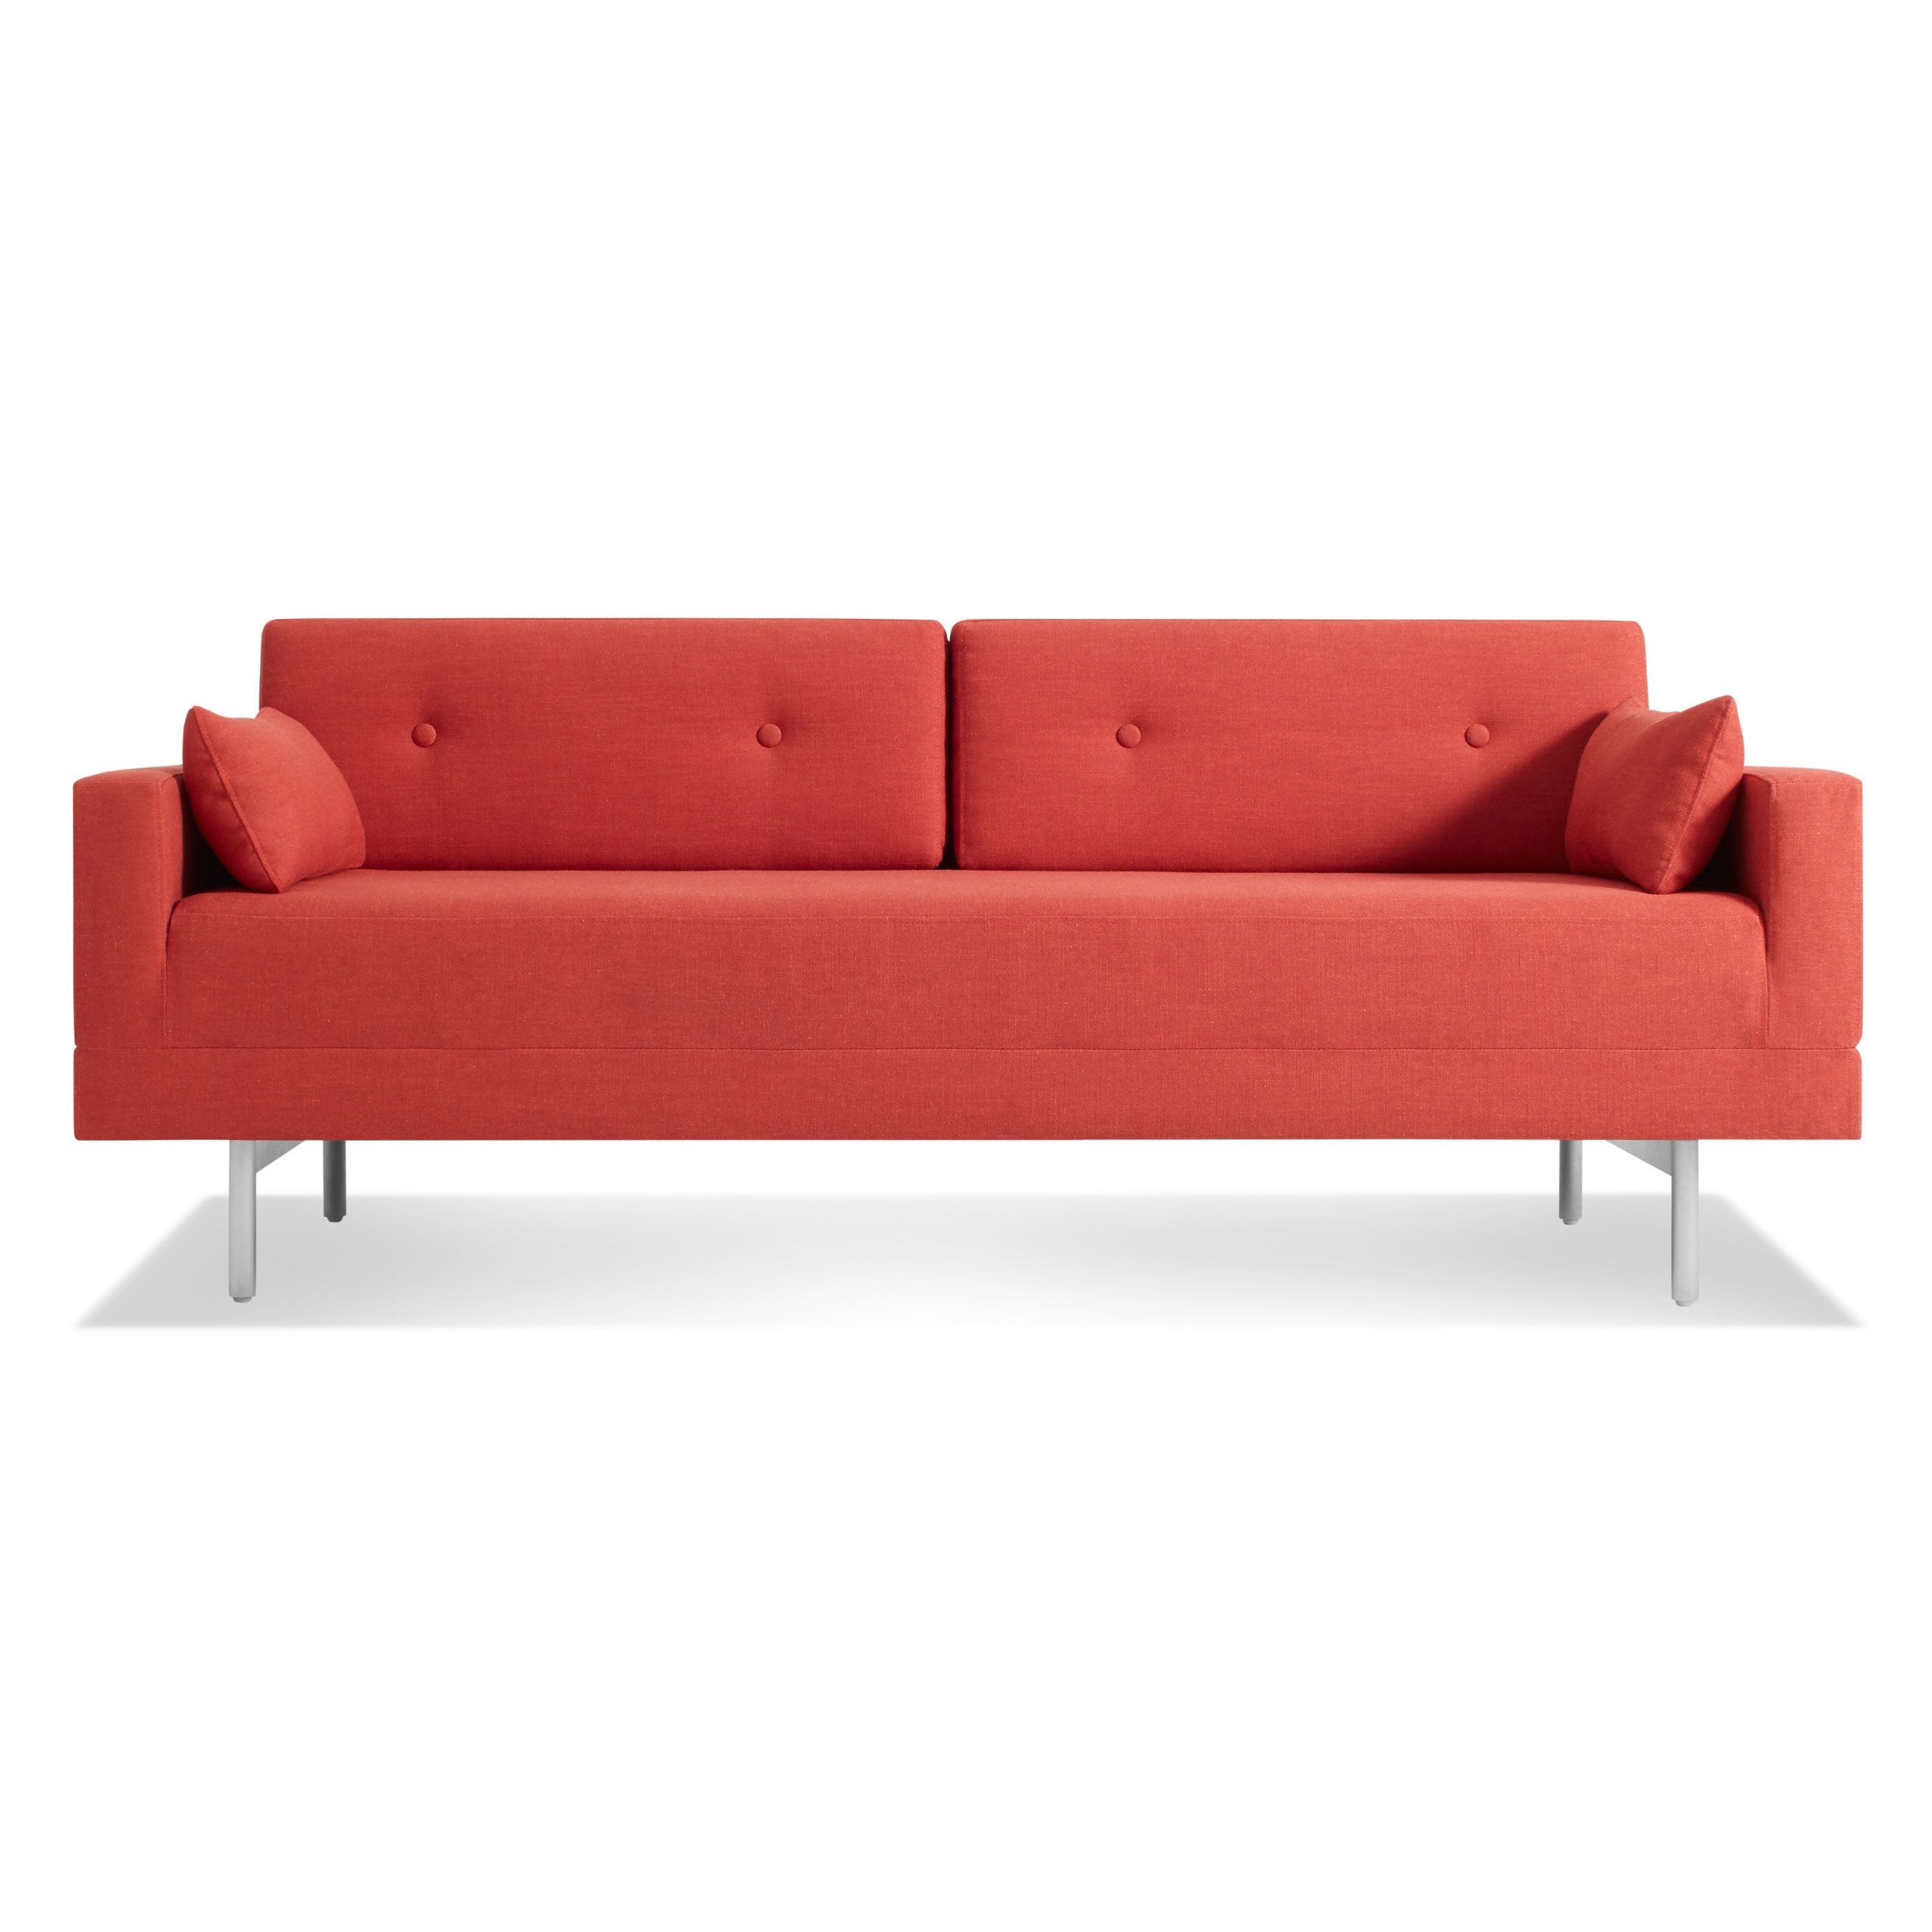 One Night Stand Sleeper Sofa Modern Seating Blu Dot Inside Red Sleeper Sofas 